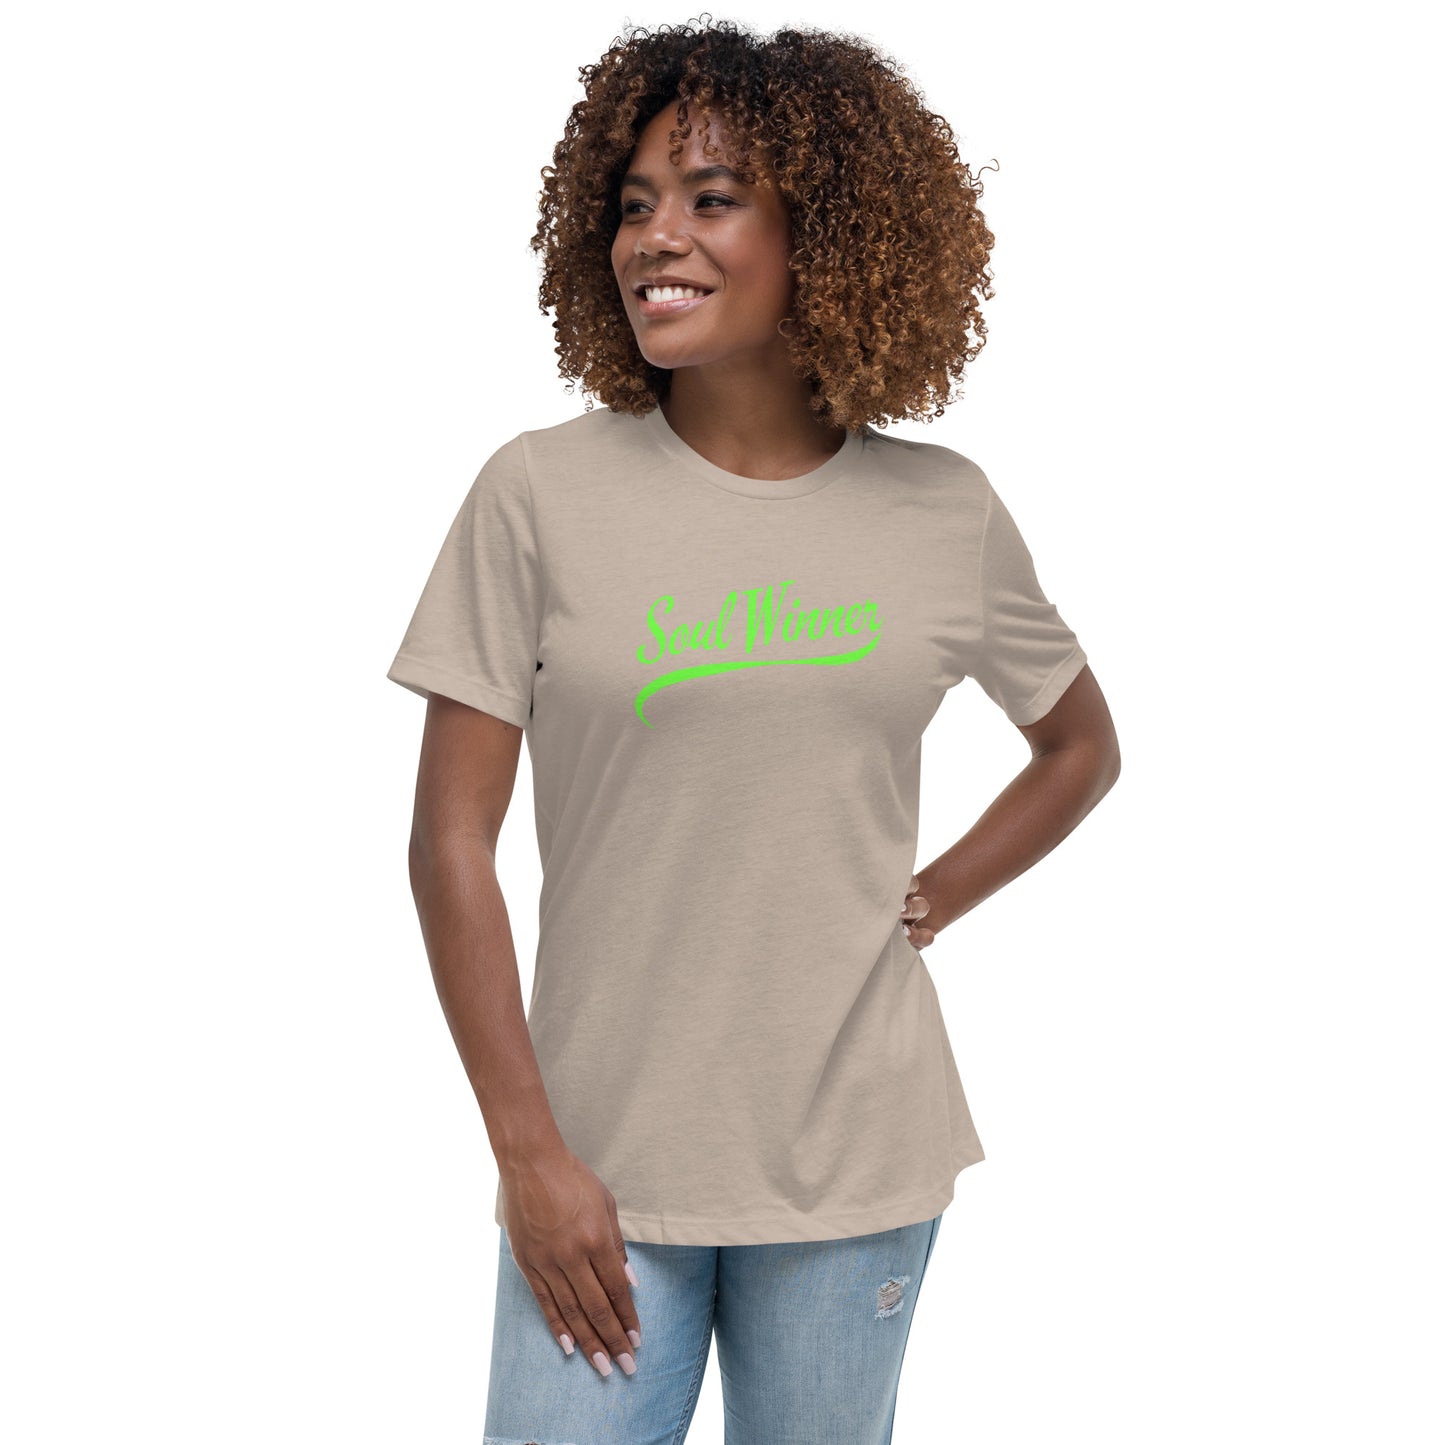 Soul Winner Women's Relaxed T-Shirt